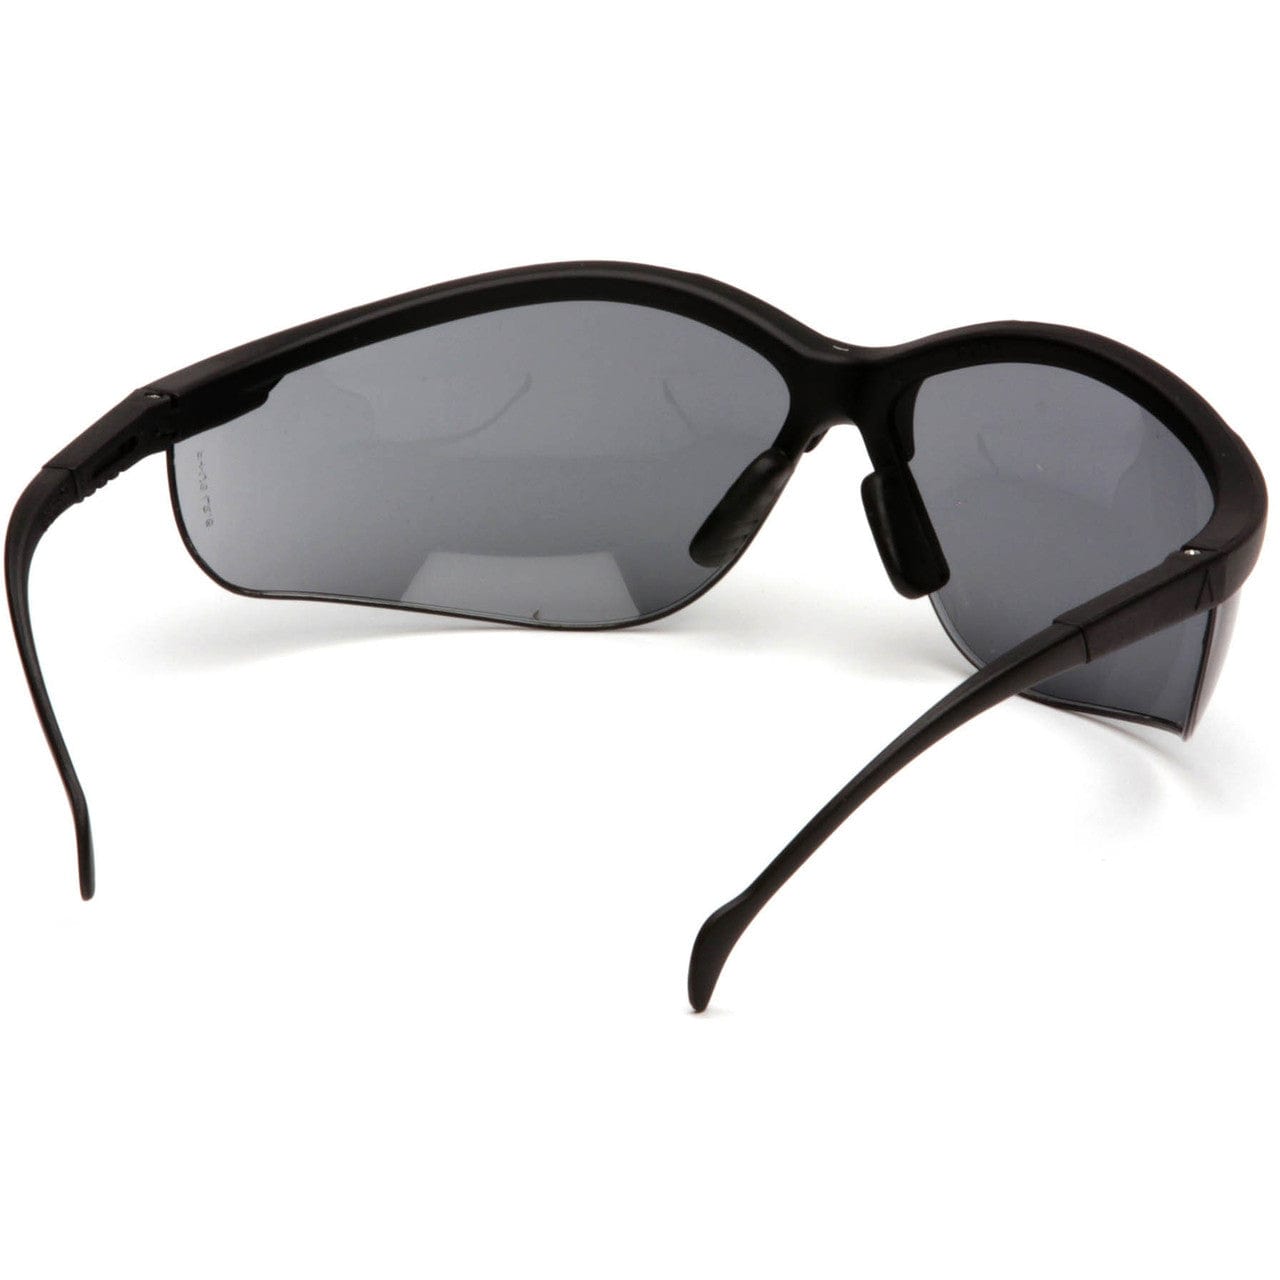 Pyramex Venture 2 Safety Glasses Black Frame Gray Anti-Fog Lens SB1820ST Inside View